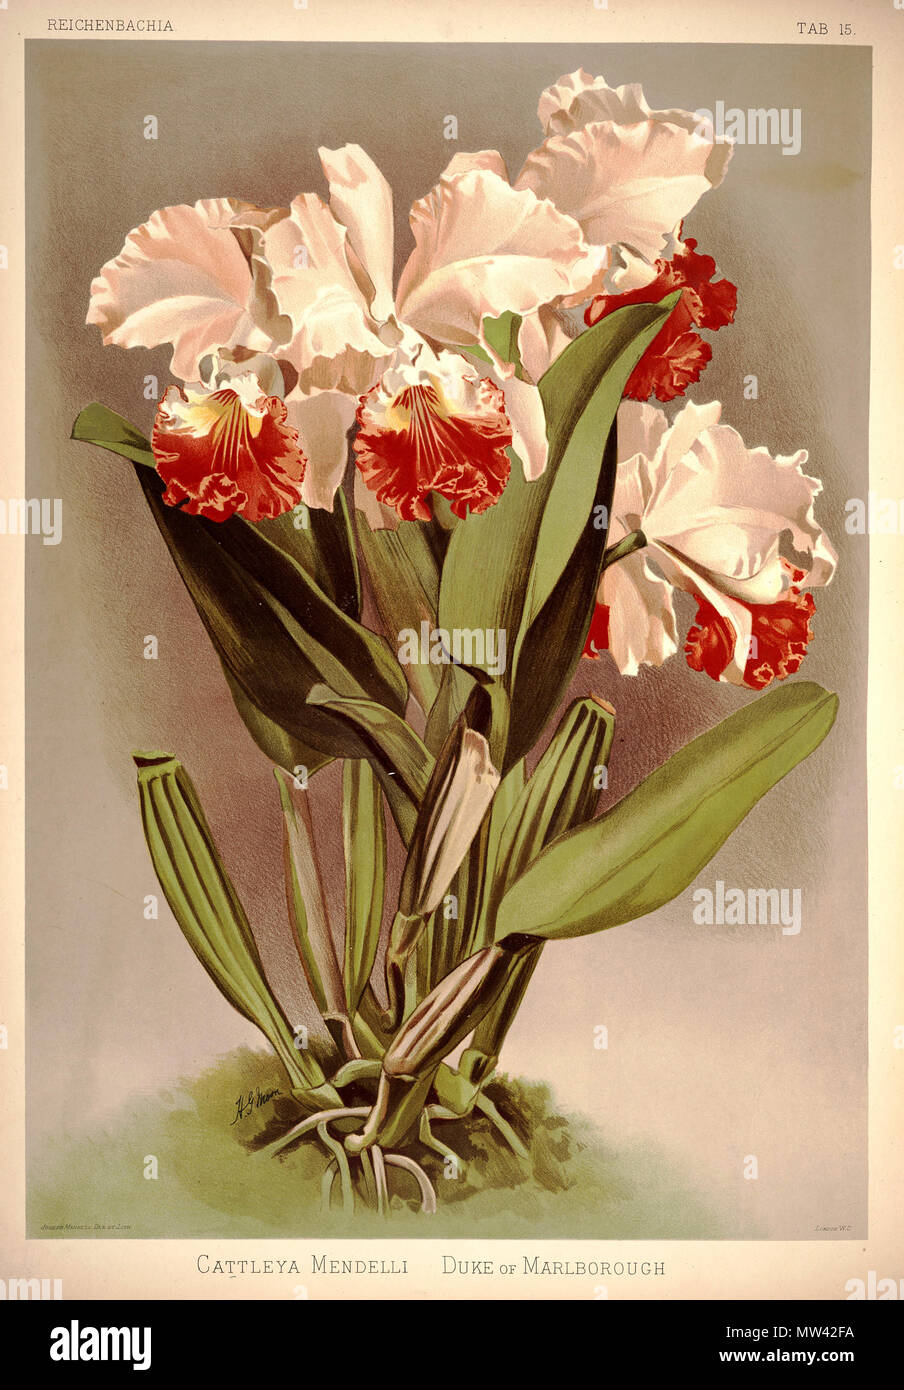 . Cattleya mendelii . between 1888 and 1894. H. Sotheran & Co., London (editor) 219 Frederick Sander - Reichenbachia I plate 15 (1888) - Cattleya mendelli Stock Photo